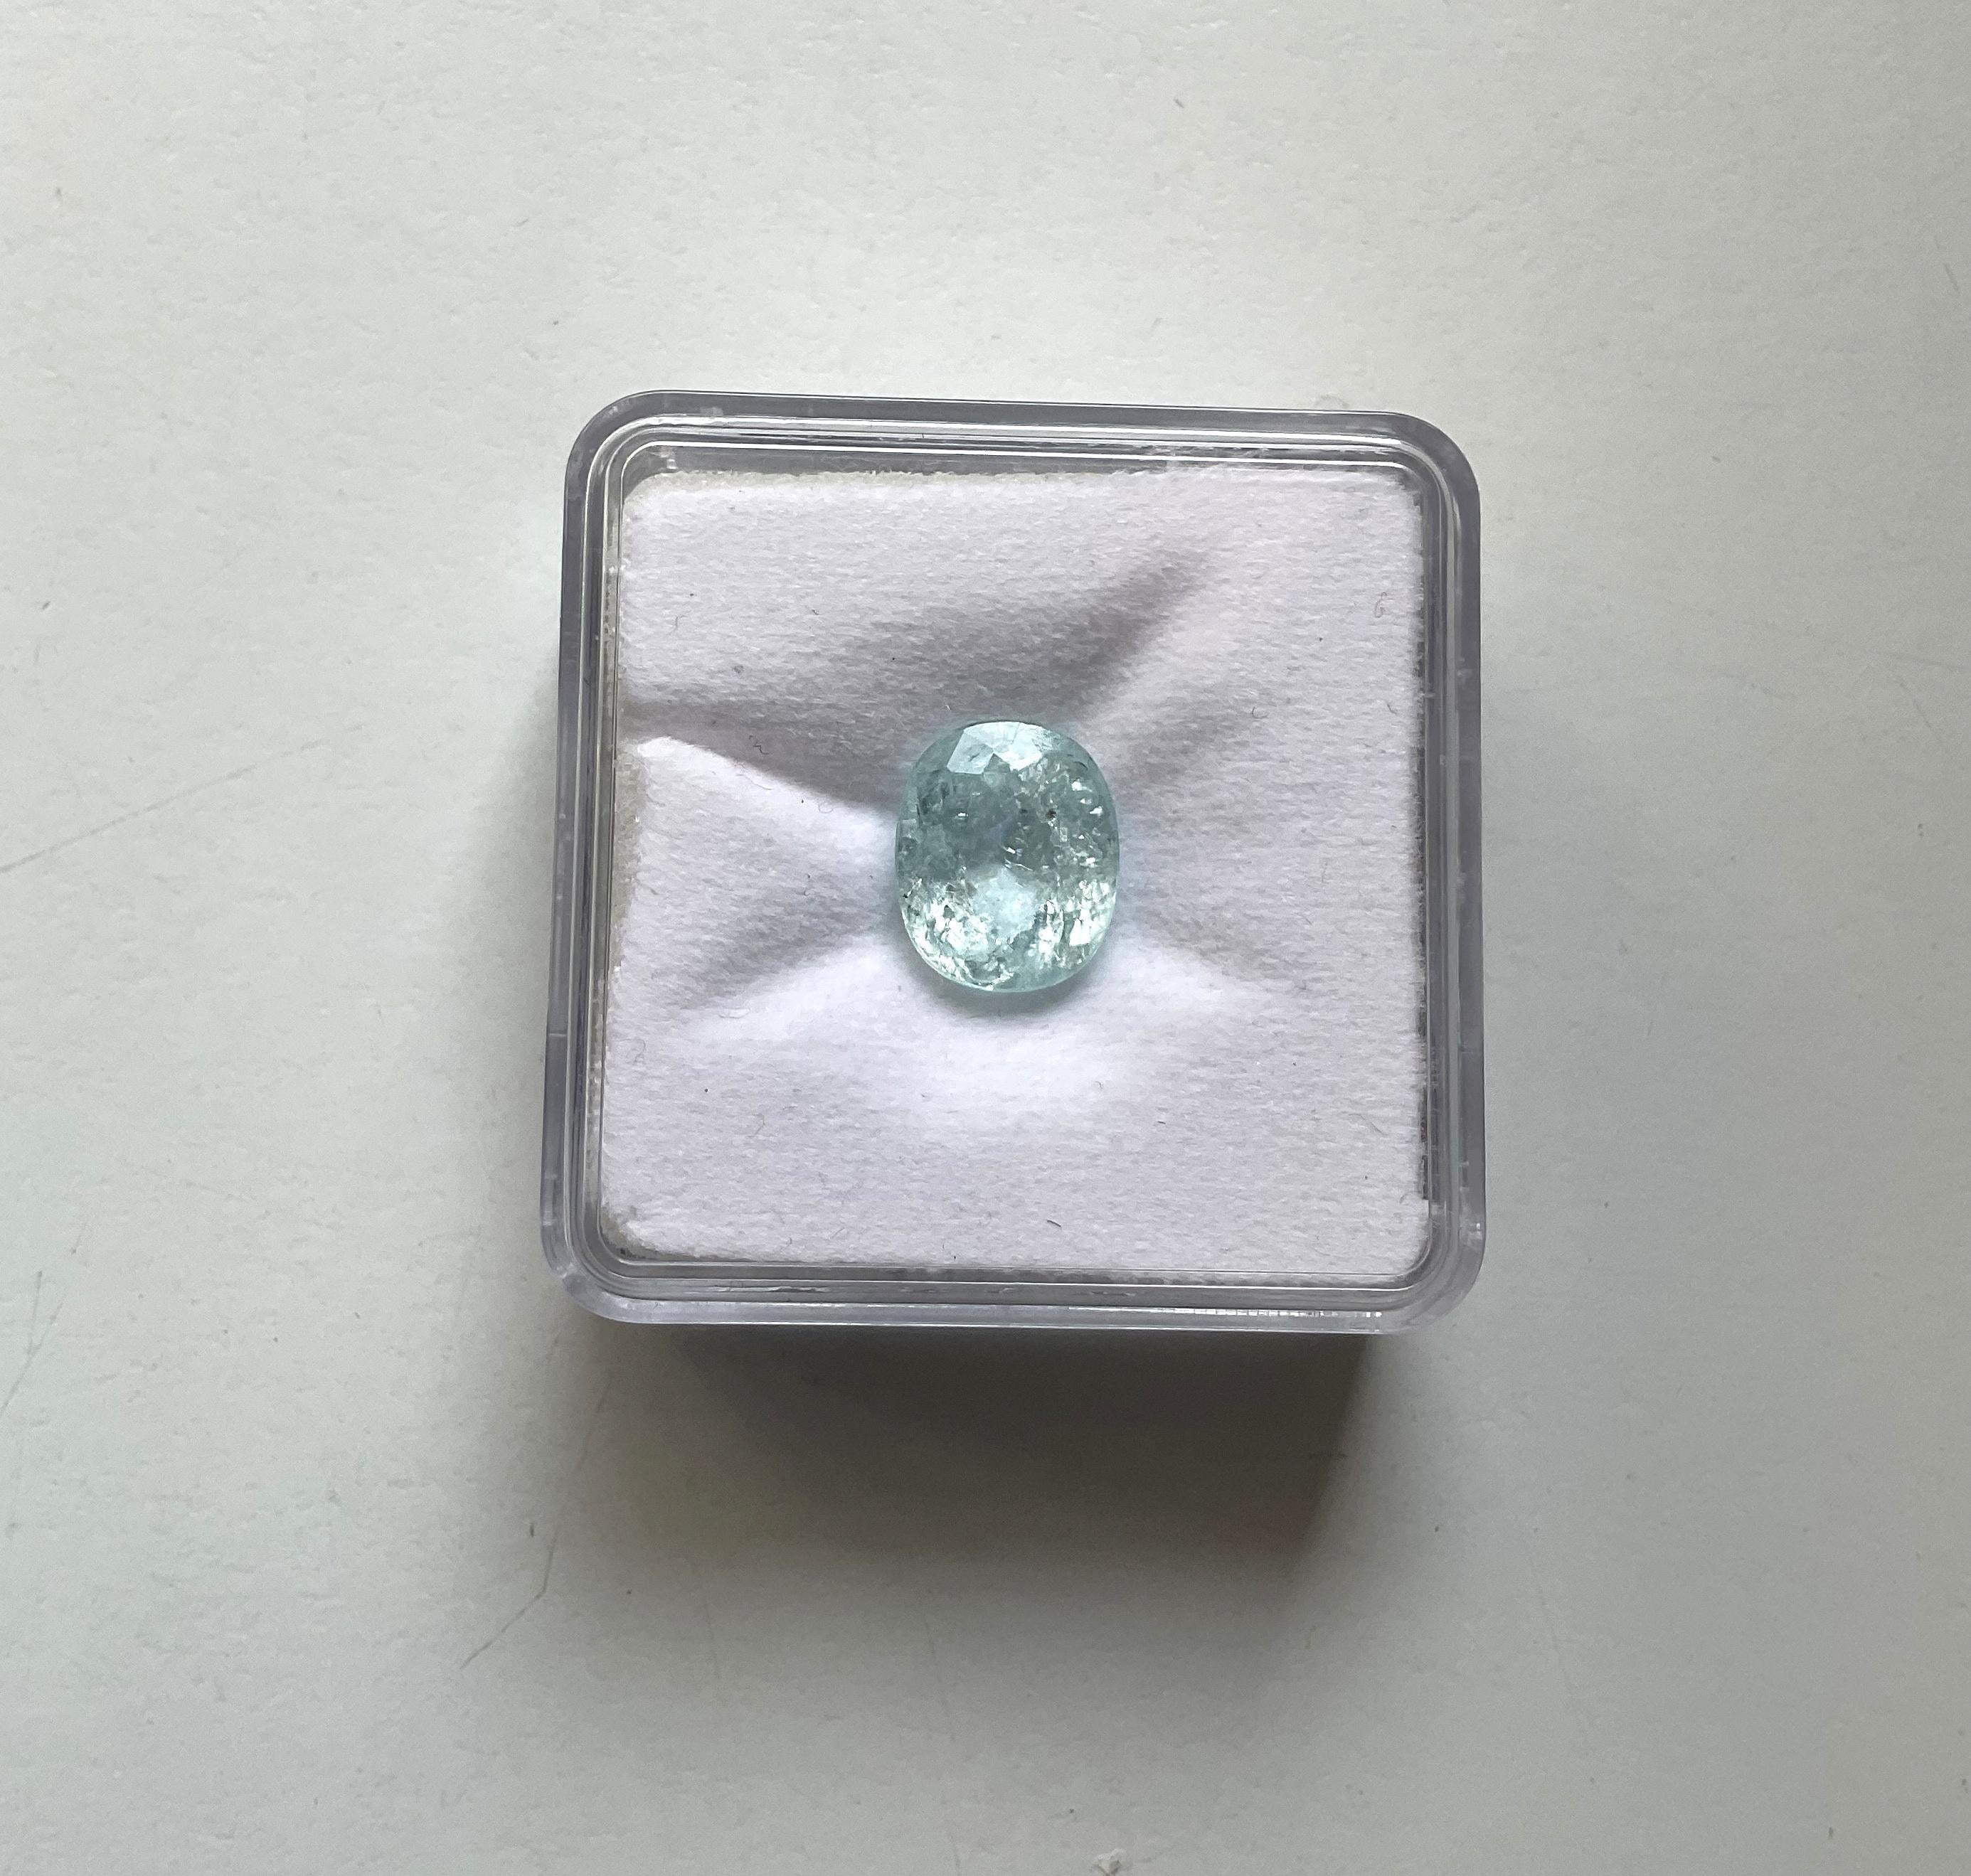 3.93 Carats Paraiba Tourmaline Oval Cut Stone for Fine Jewelry Natural gemstone

Gemstone - Paraiba Tourmaline
Weight - 3.93 carats
Size - 11x9 MM
Piece - 1